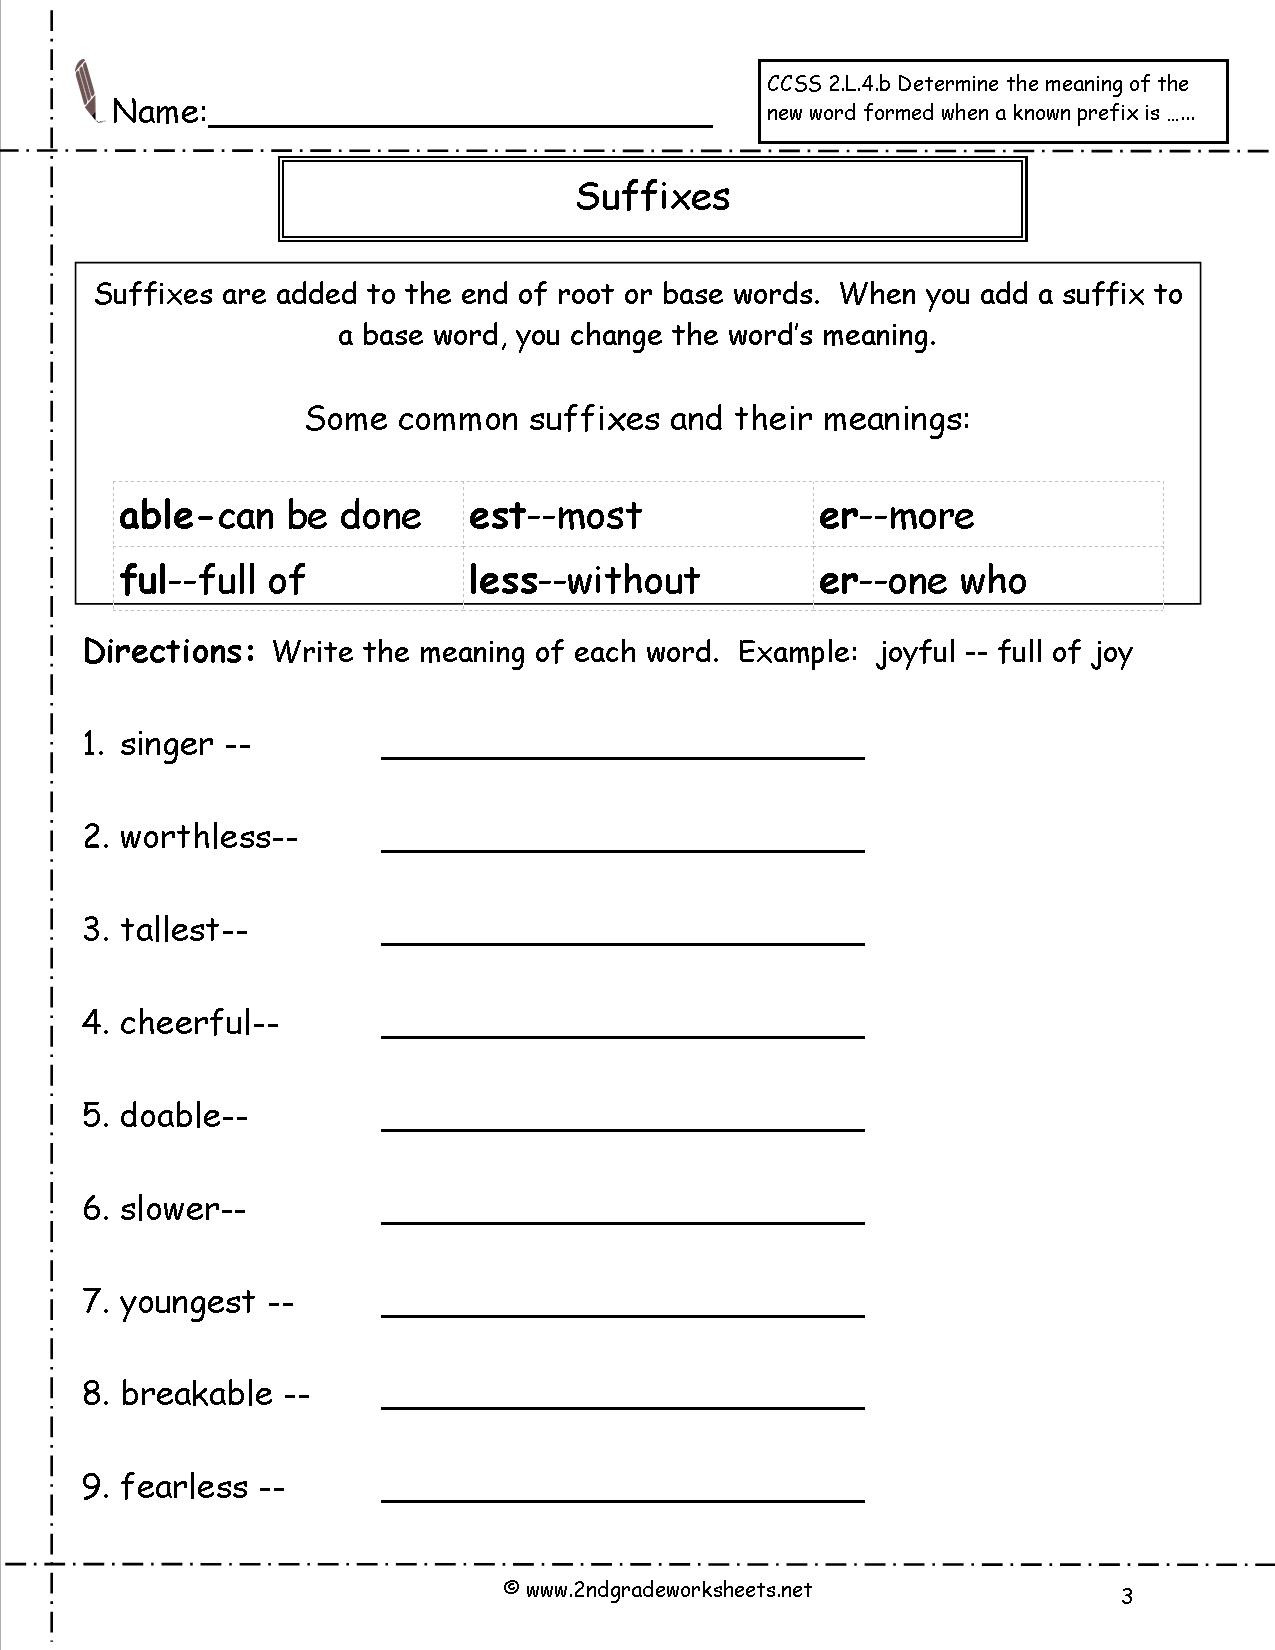 Suffixes Worksheets for 3rd Grade Second Grade Prefixes Worksheets